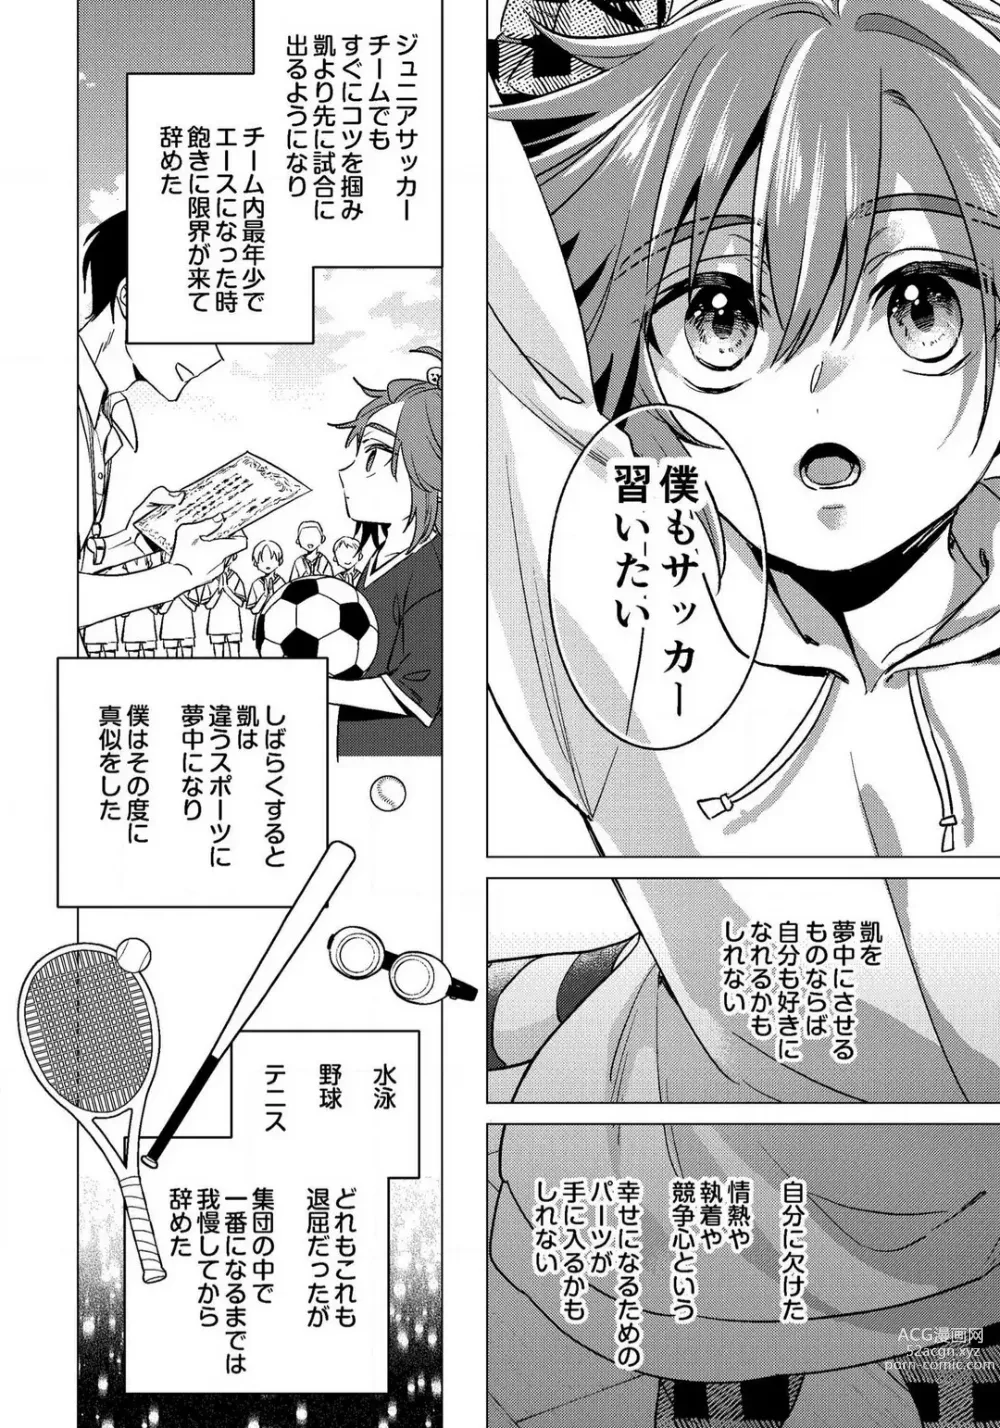 Page 14 of manga Ijimerare - Onna